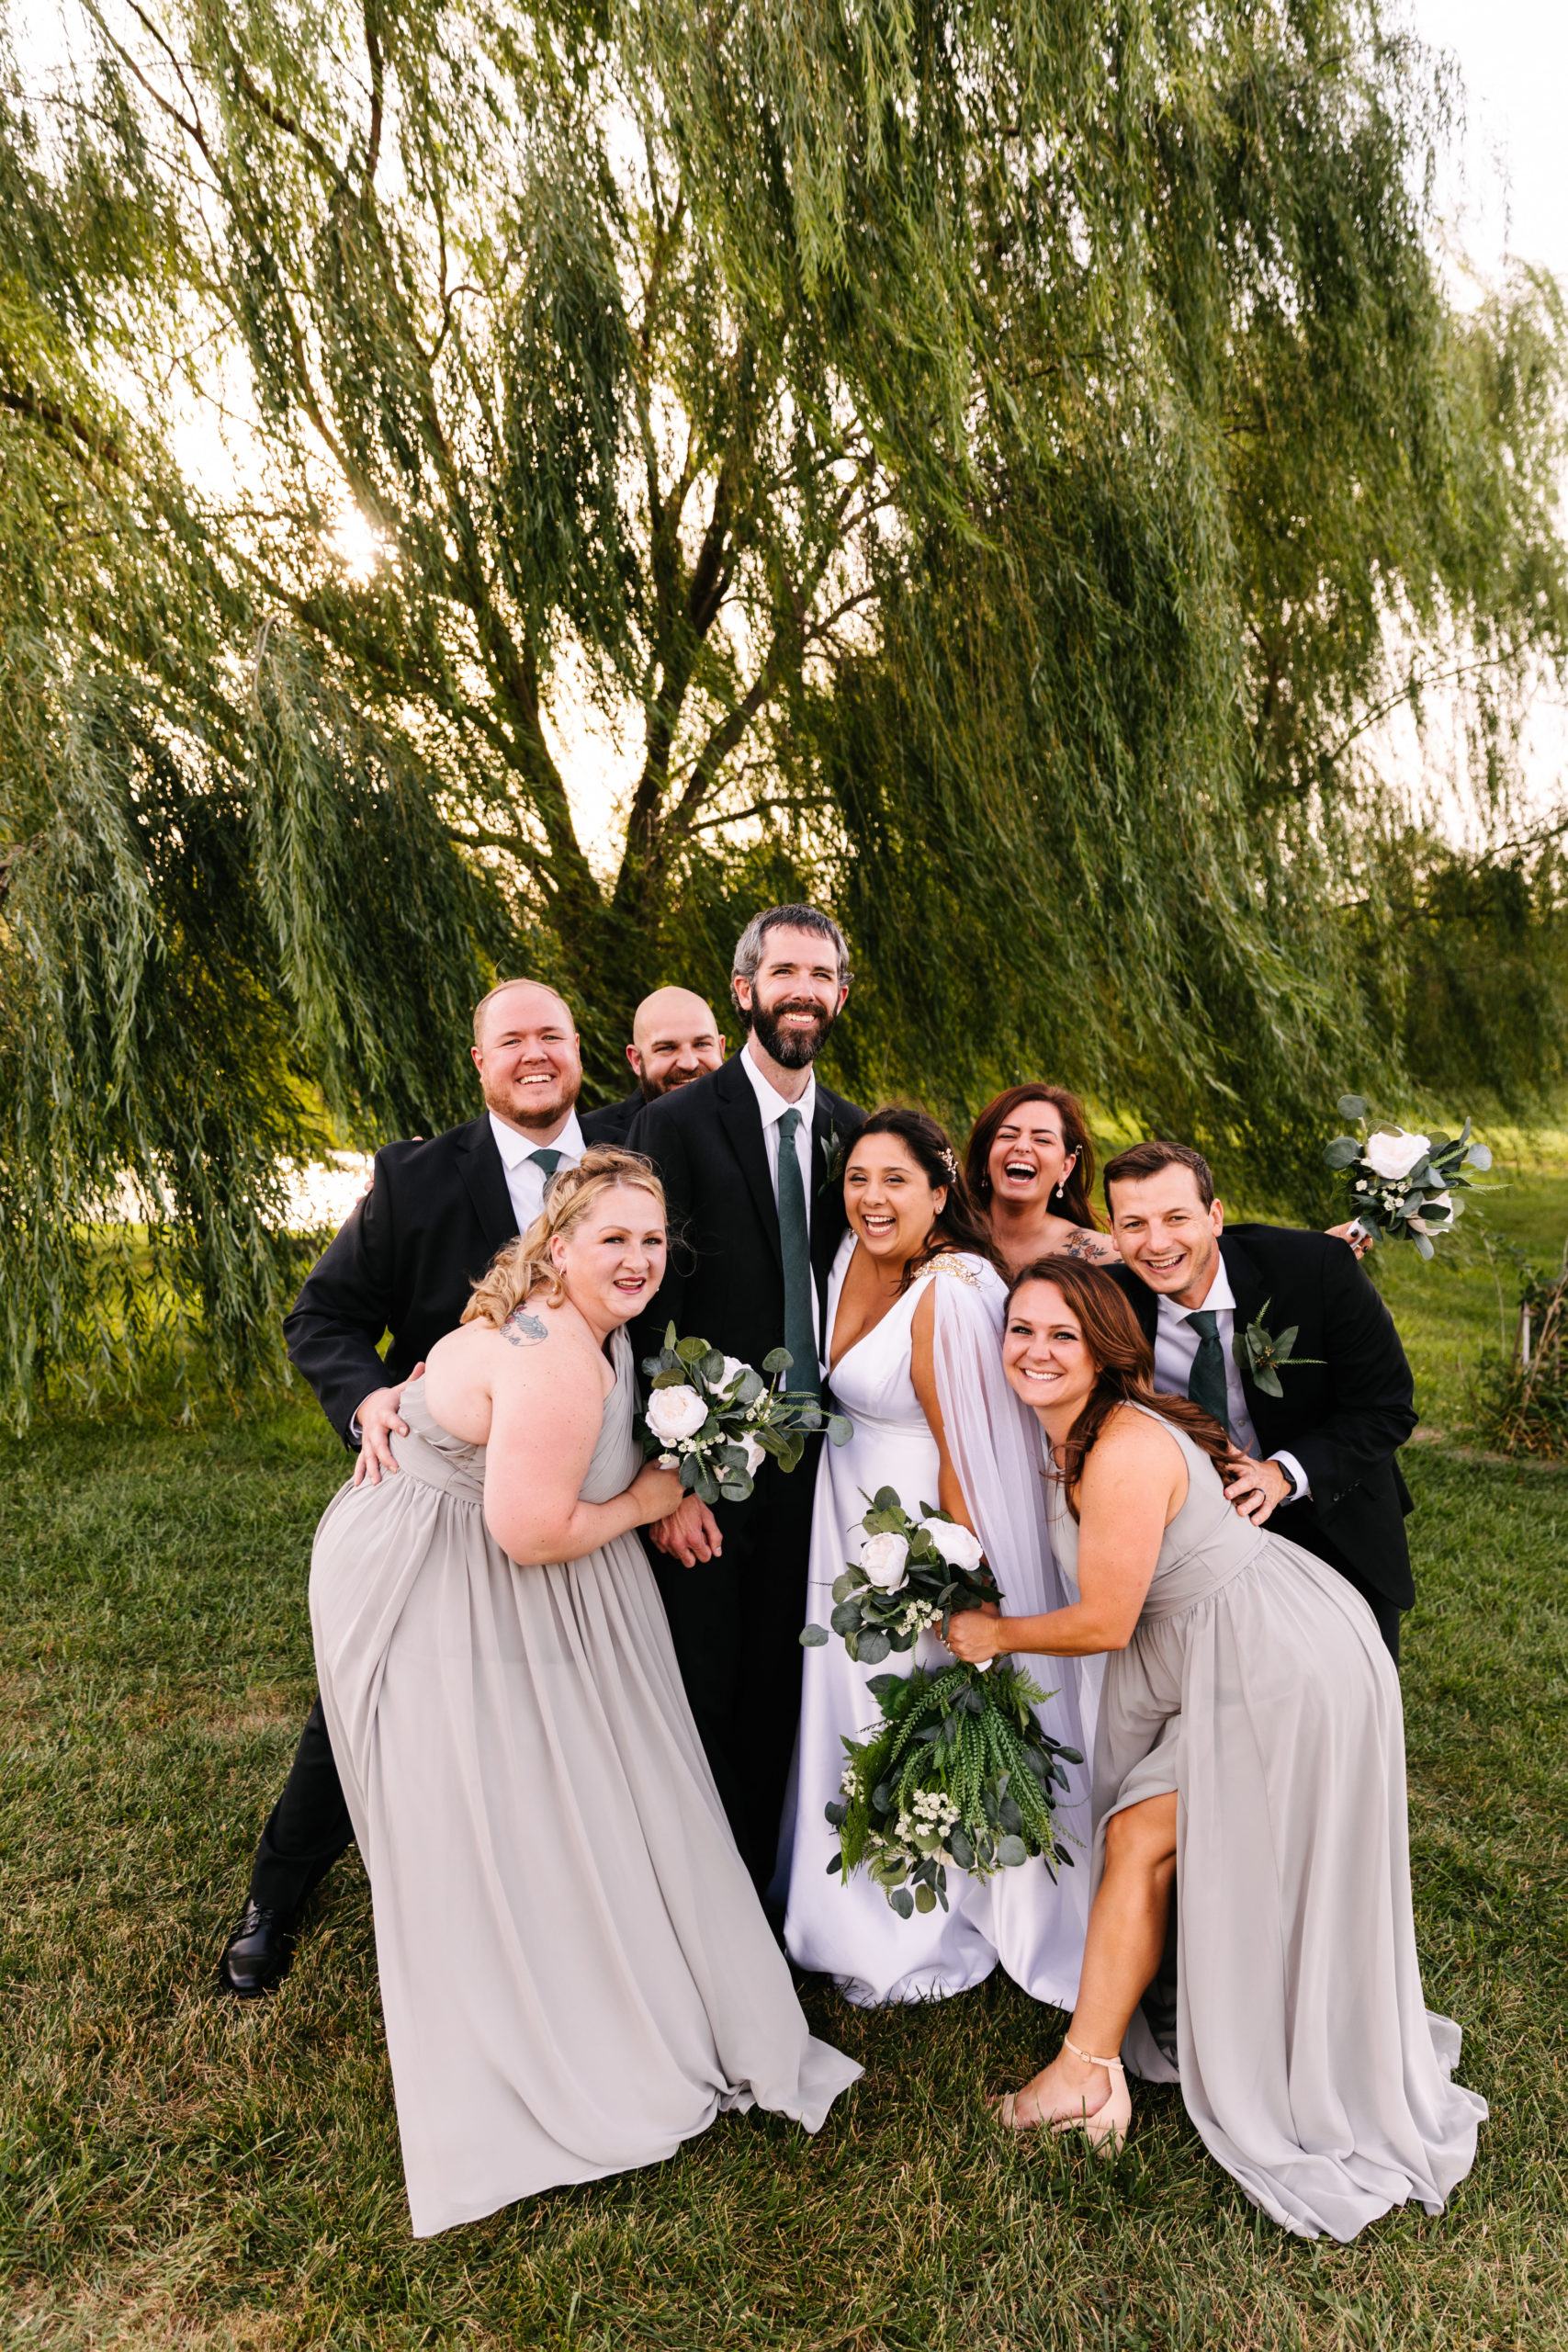 fun ways to get photos of wedding guests, wedding party takes photos during a fall outdoor wedding in Kansas City